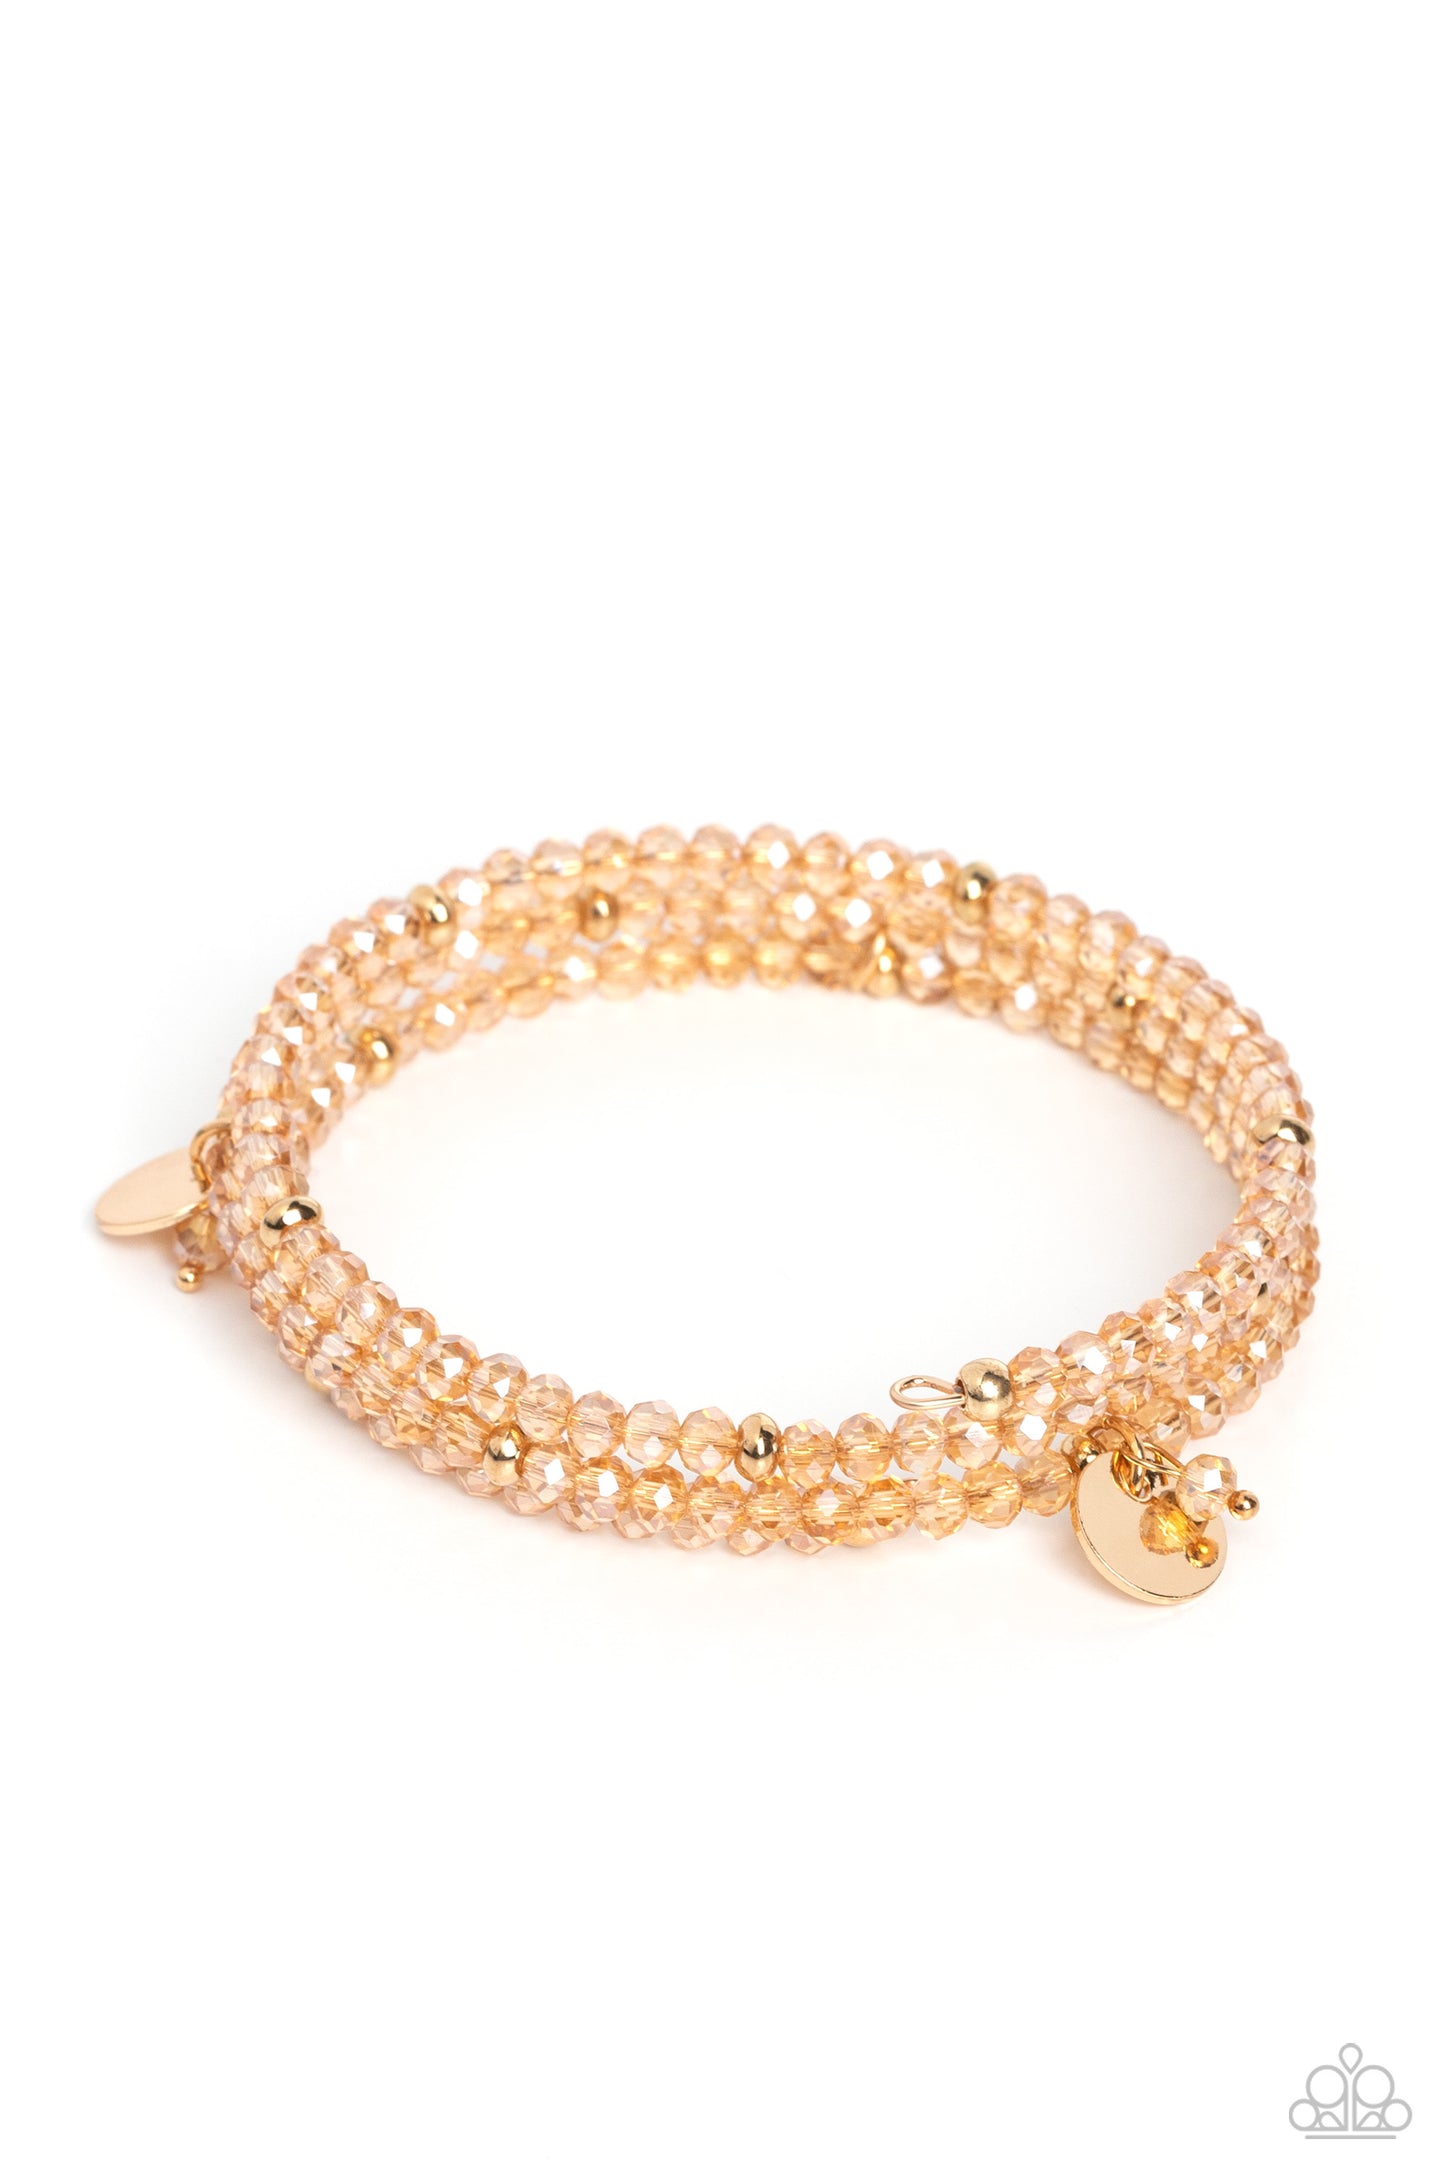 Paparazzi Illusive Infinity - Gold Bracelet Illusive Infinity - Gold Bracelet - Cute Bracelets Paparazzi jewelry images